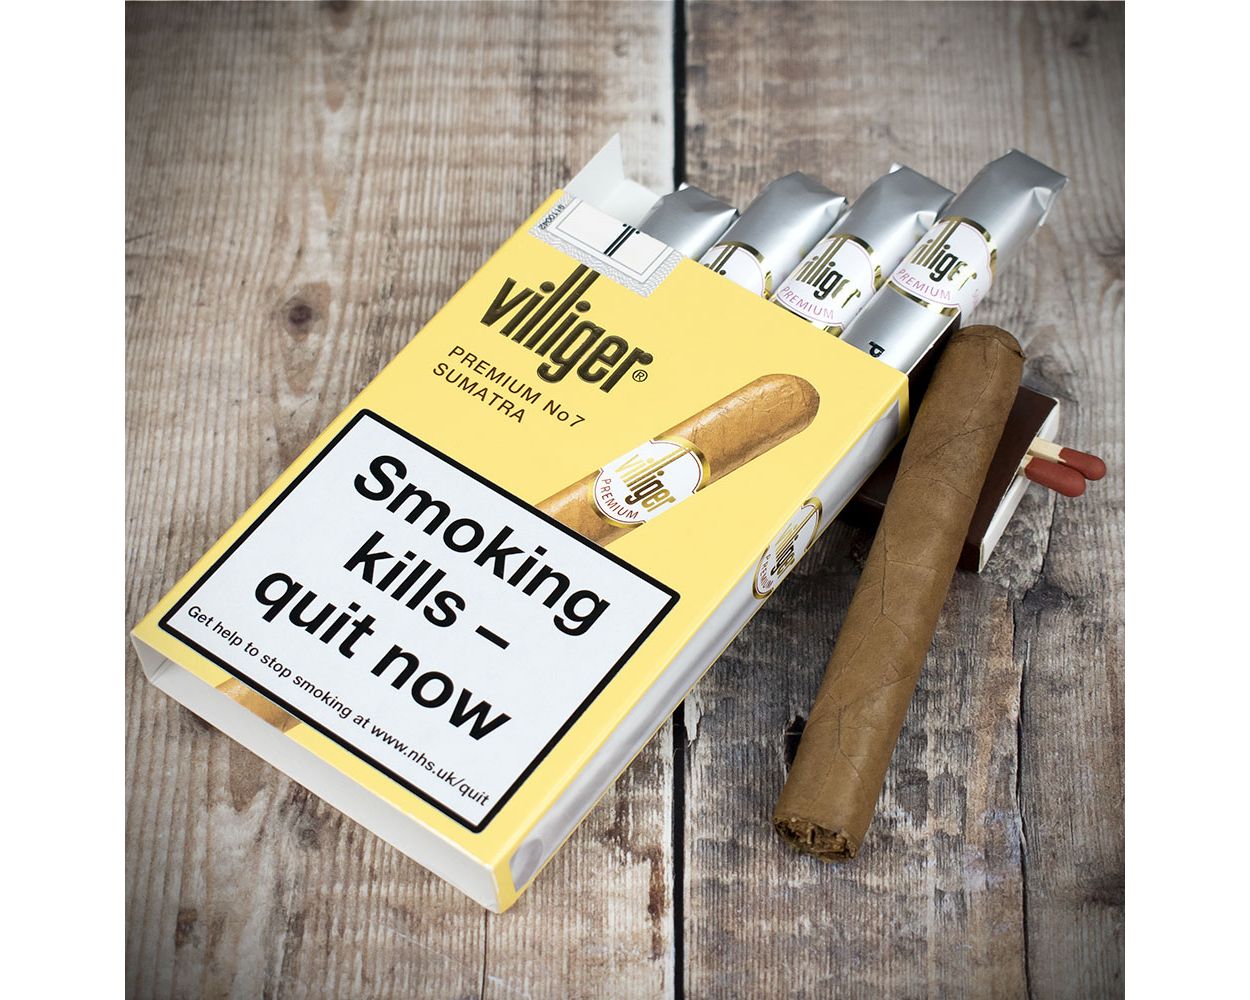 Villiger, Premium No7 Sumatra Cigars